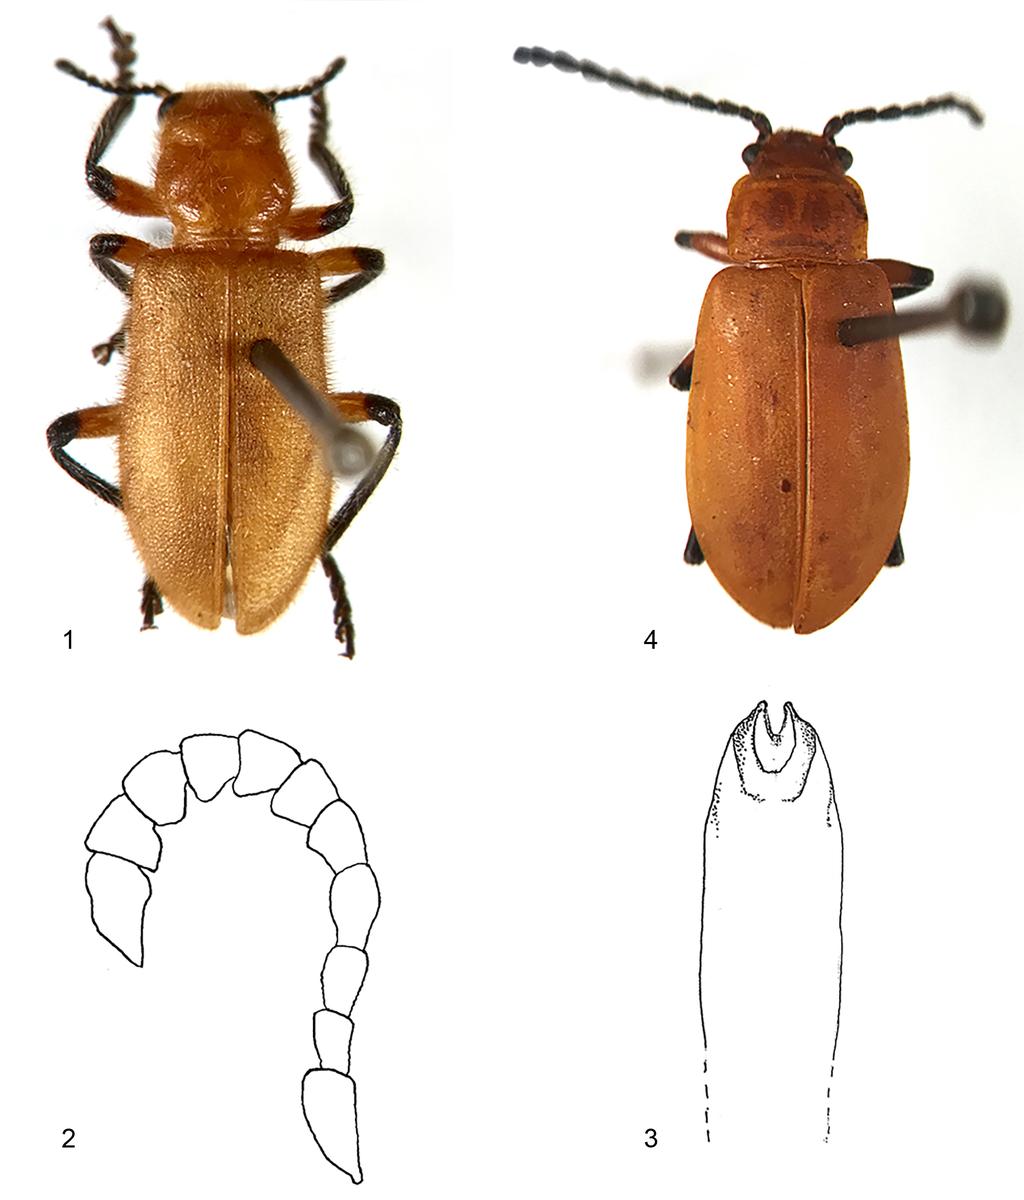 New Mimetic Cleridae Insecta Mundi 0591, December 2017 13 Figures 1 4. Namba testacea and Aulacoscelis hoegei anatomy.